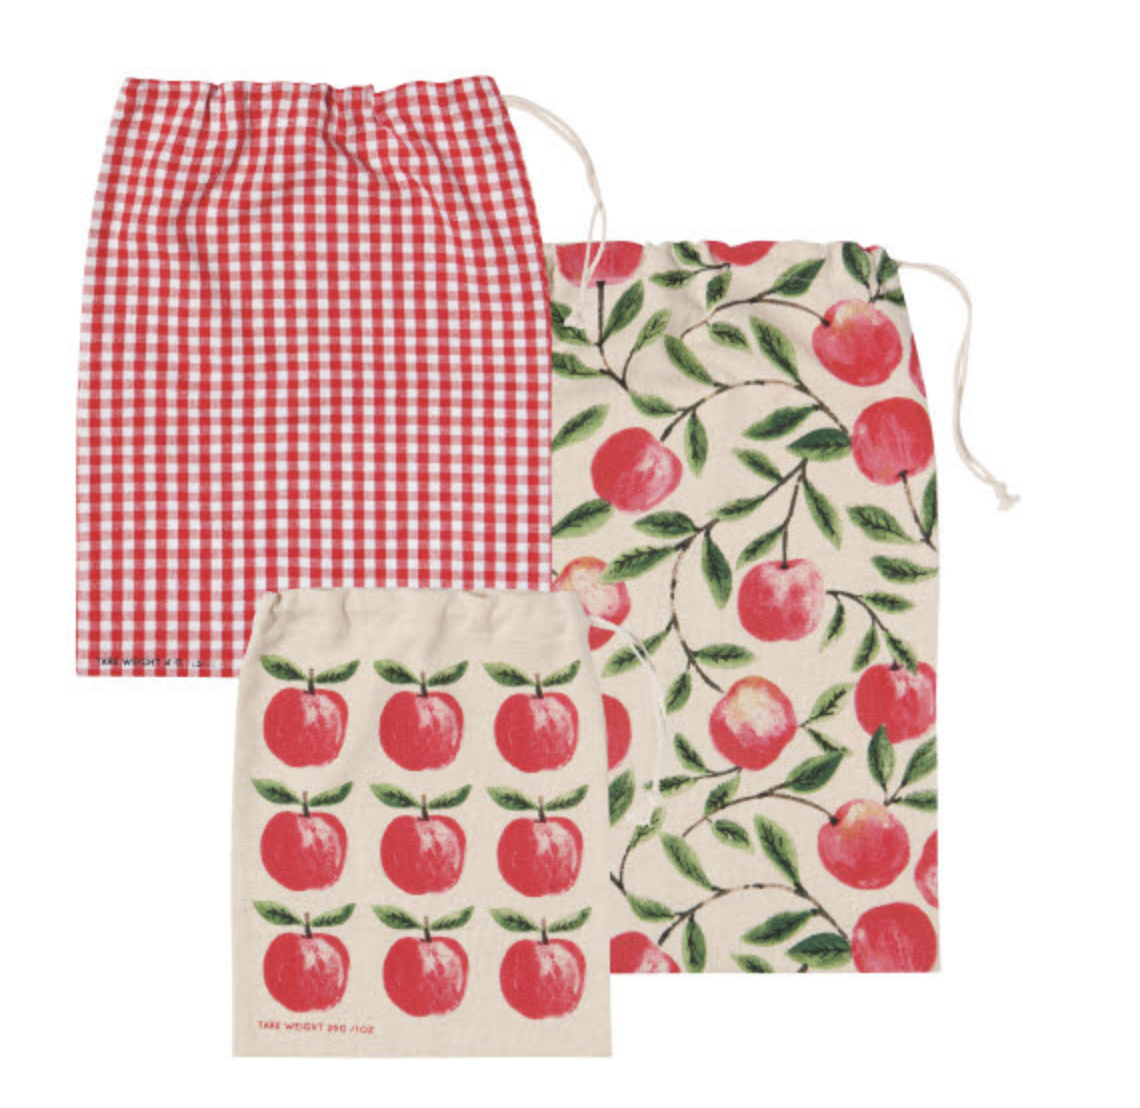 Orchard Reusable Cotton Produce Bags, set/3